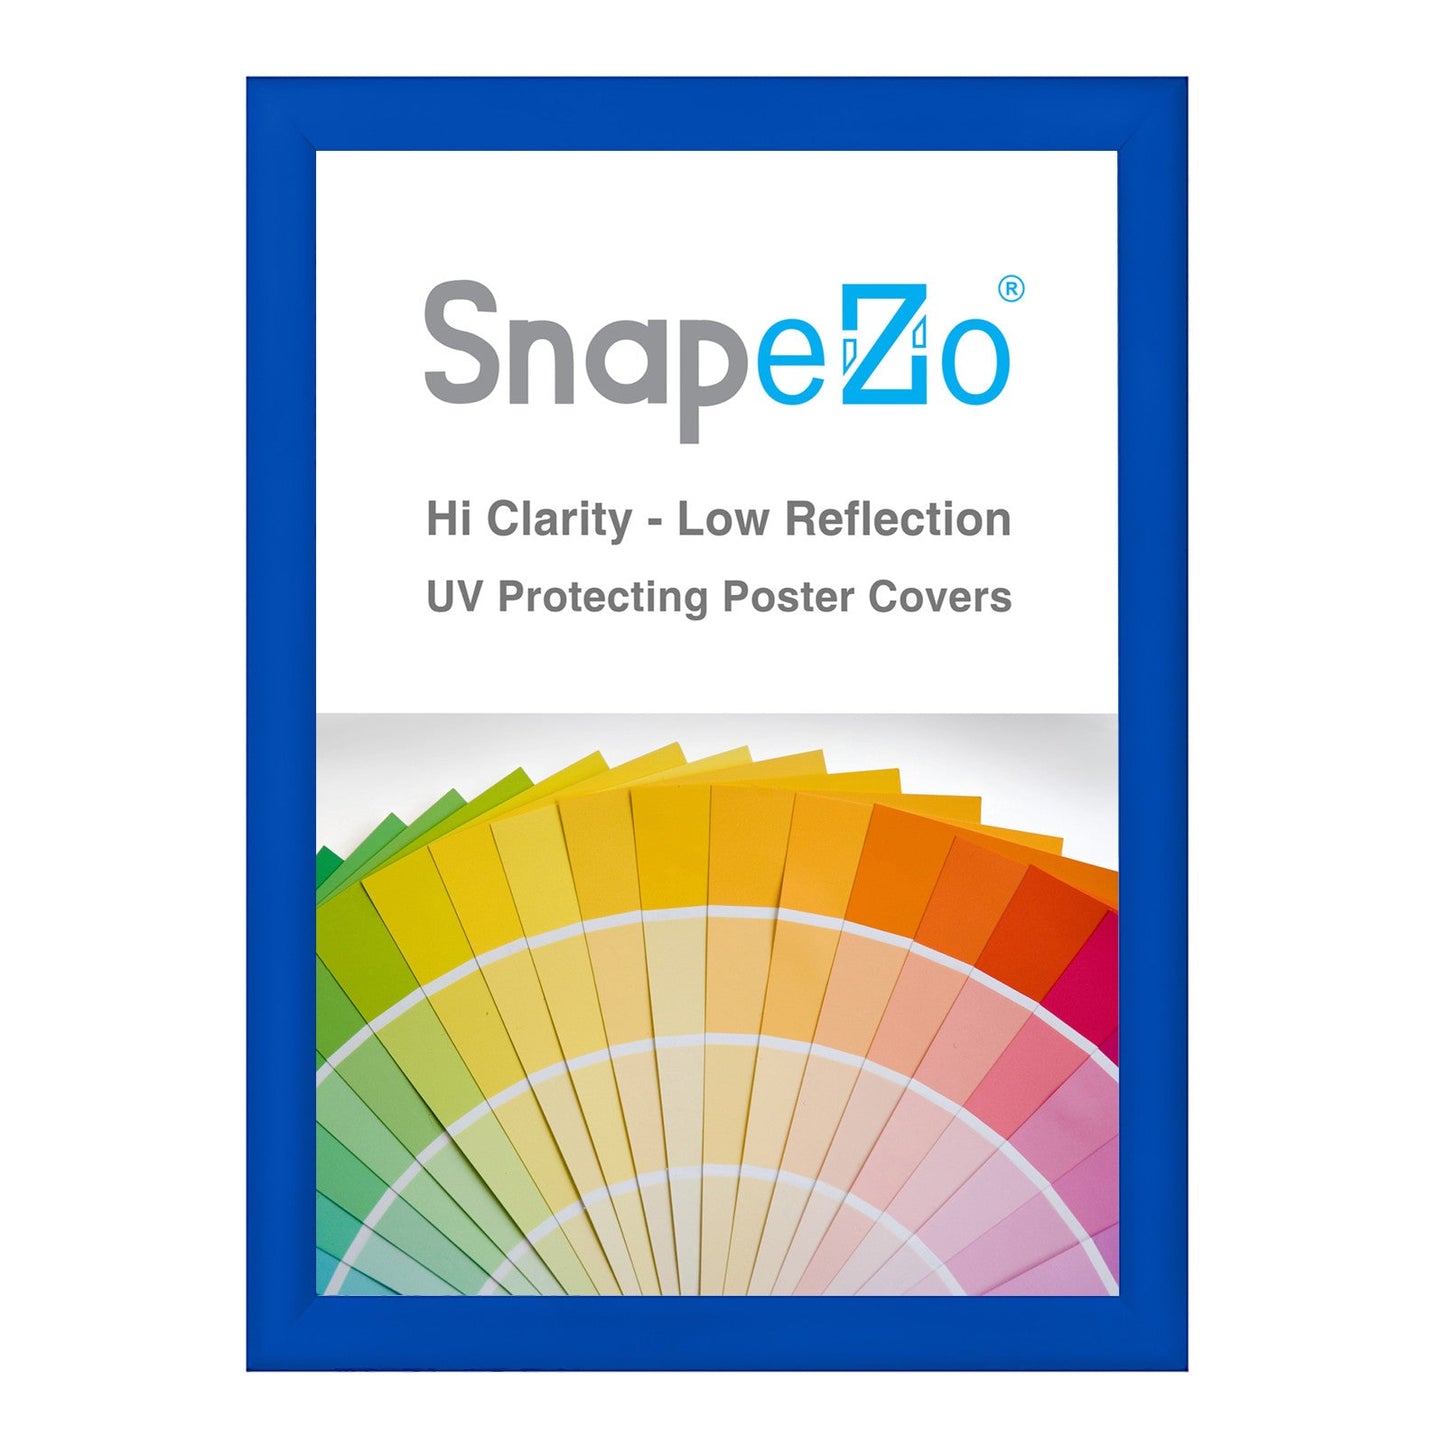 25x35 Blue SnapeZo® Snap Frame - 1.2" Profile